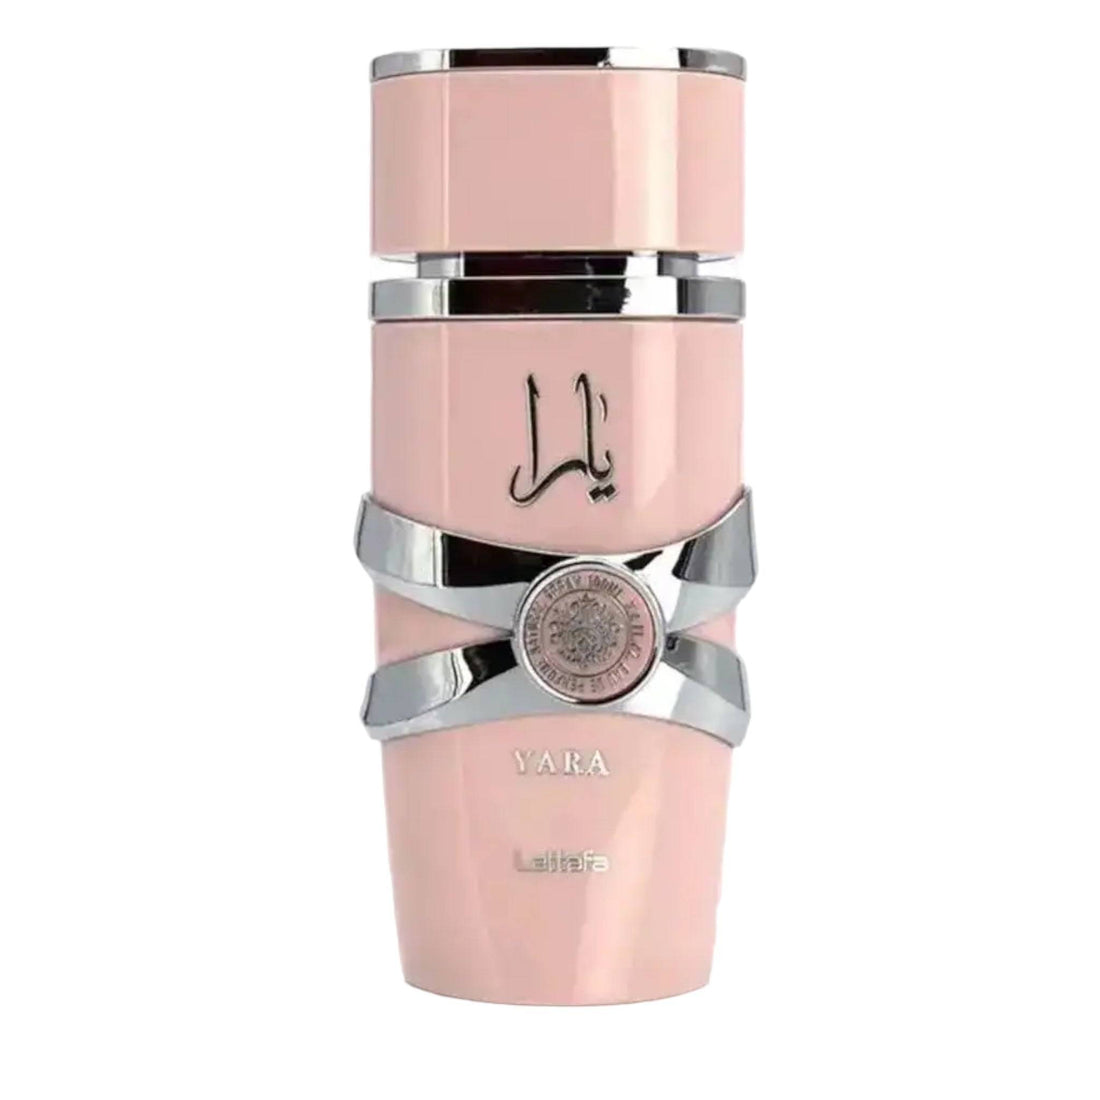 Yara by Lattafa Perfume 100ml - Best Eau De Parfum Online